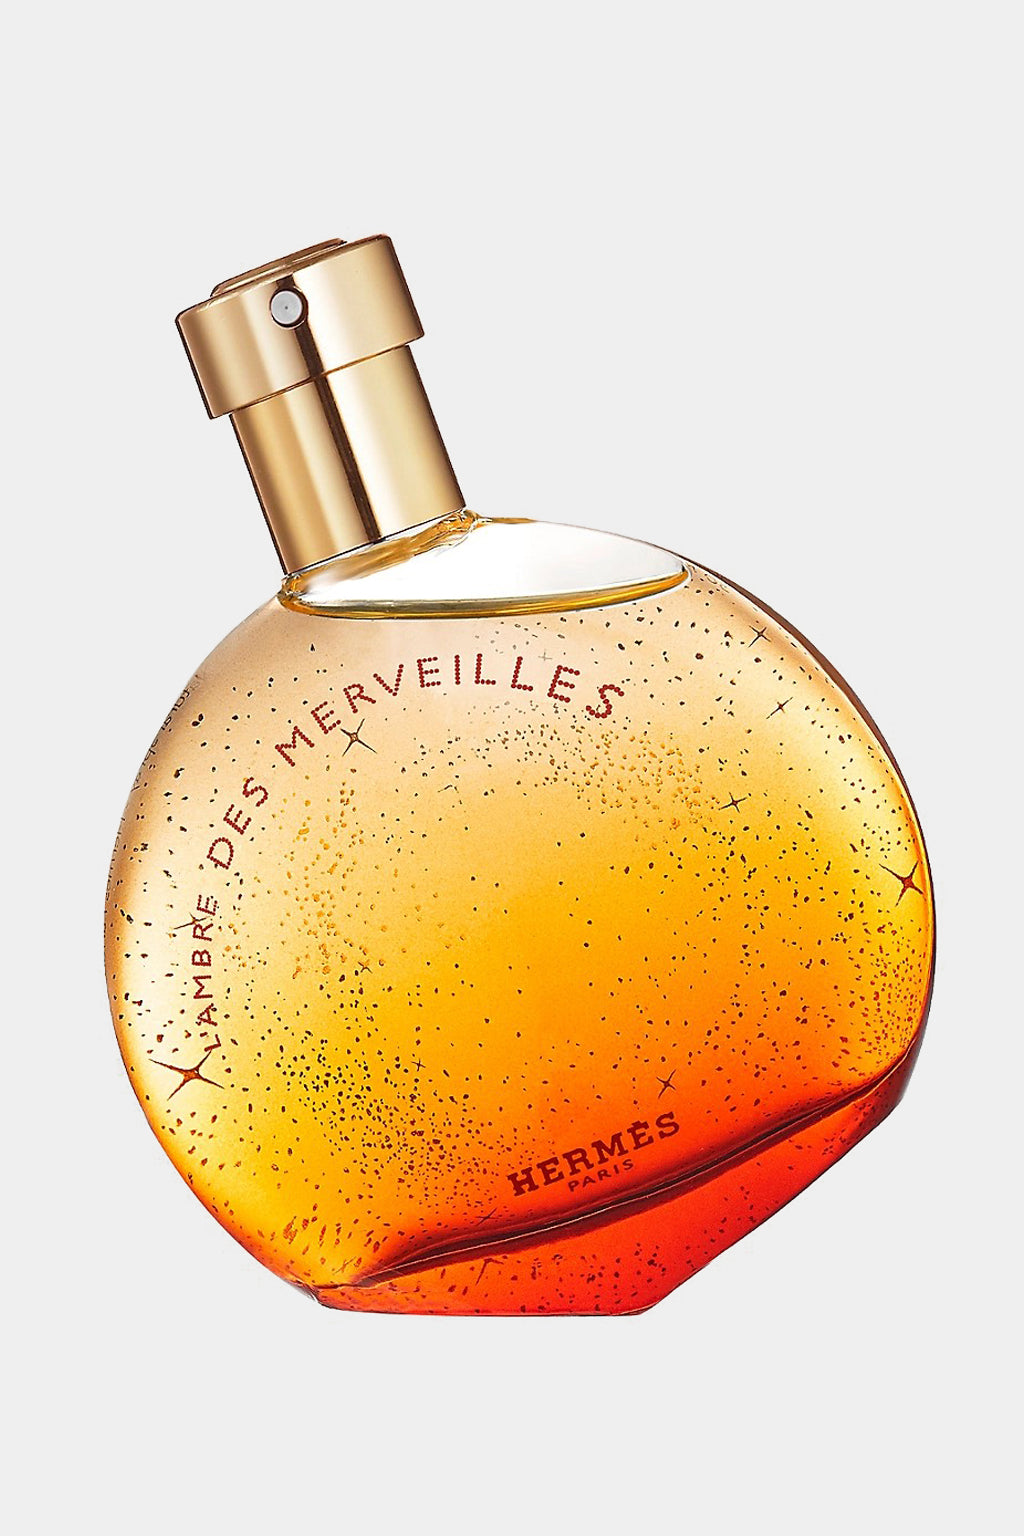 Hermes - L'Ambre des Merveilles Eau de parfum